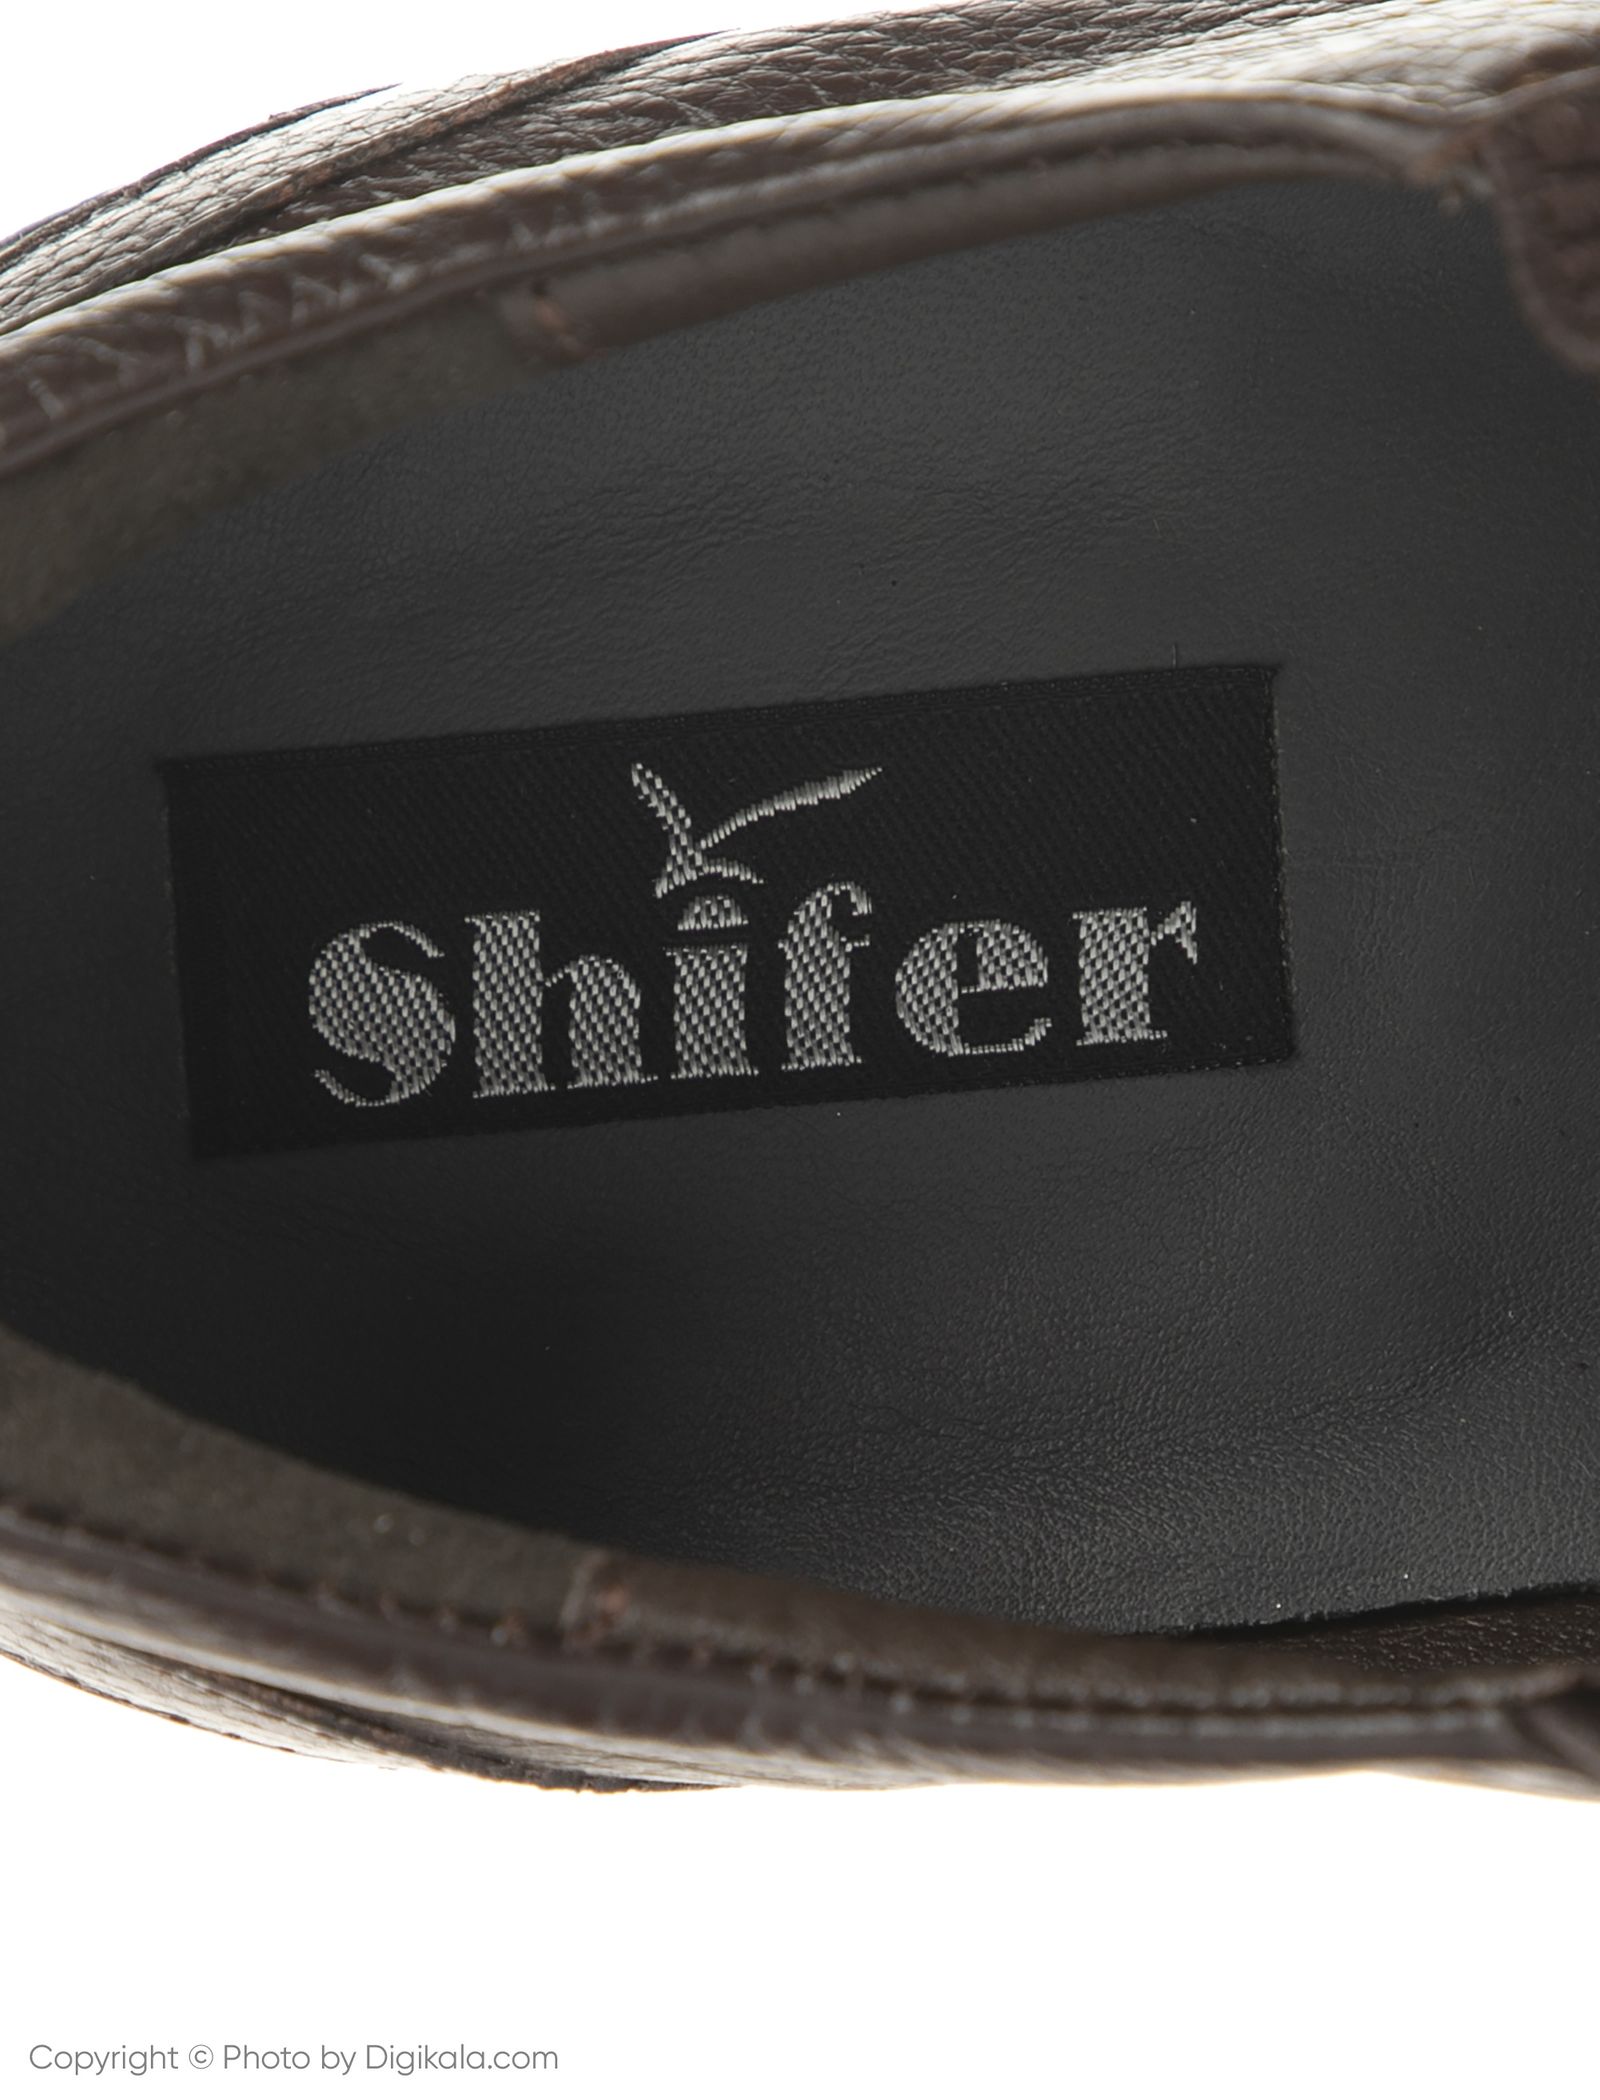 کفش روزمره مردانه شیفر مدل 7216A-104 -  - 8